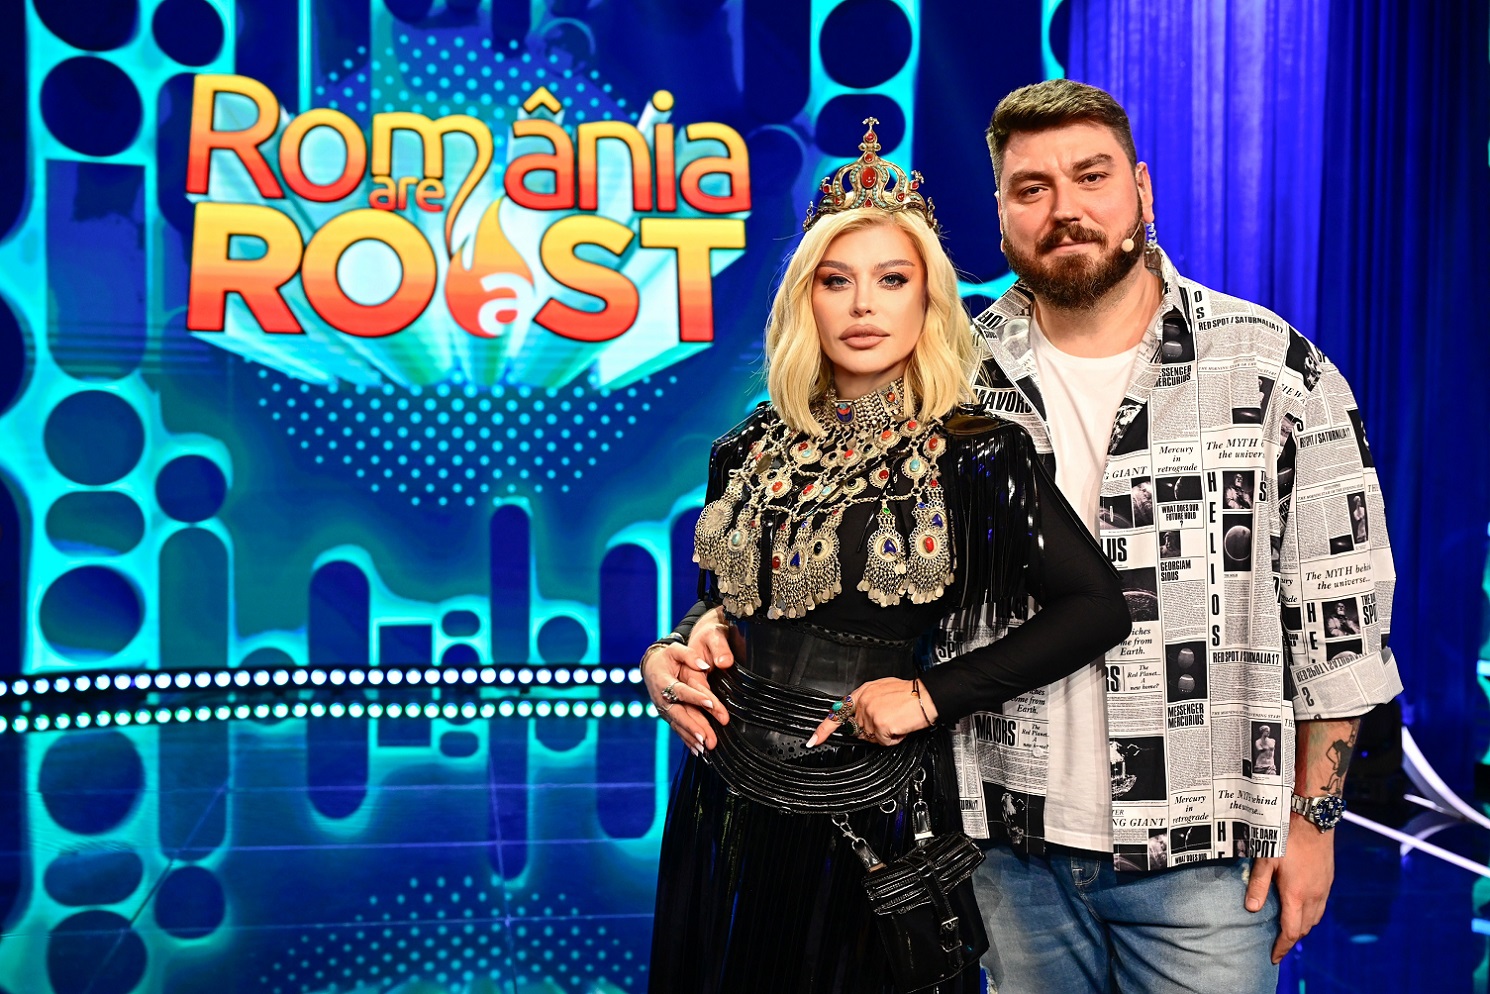 Cine prezintă România are Roast